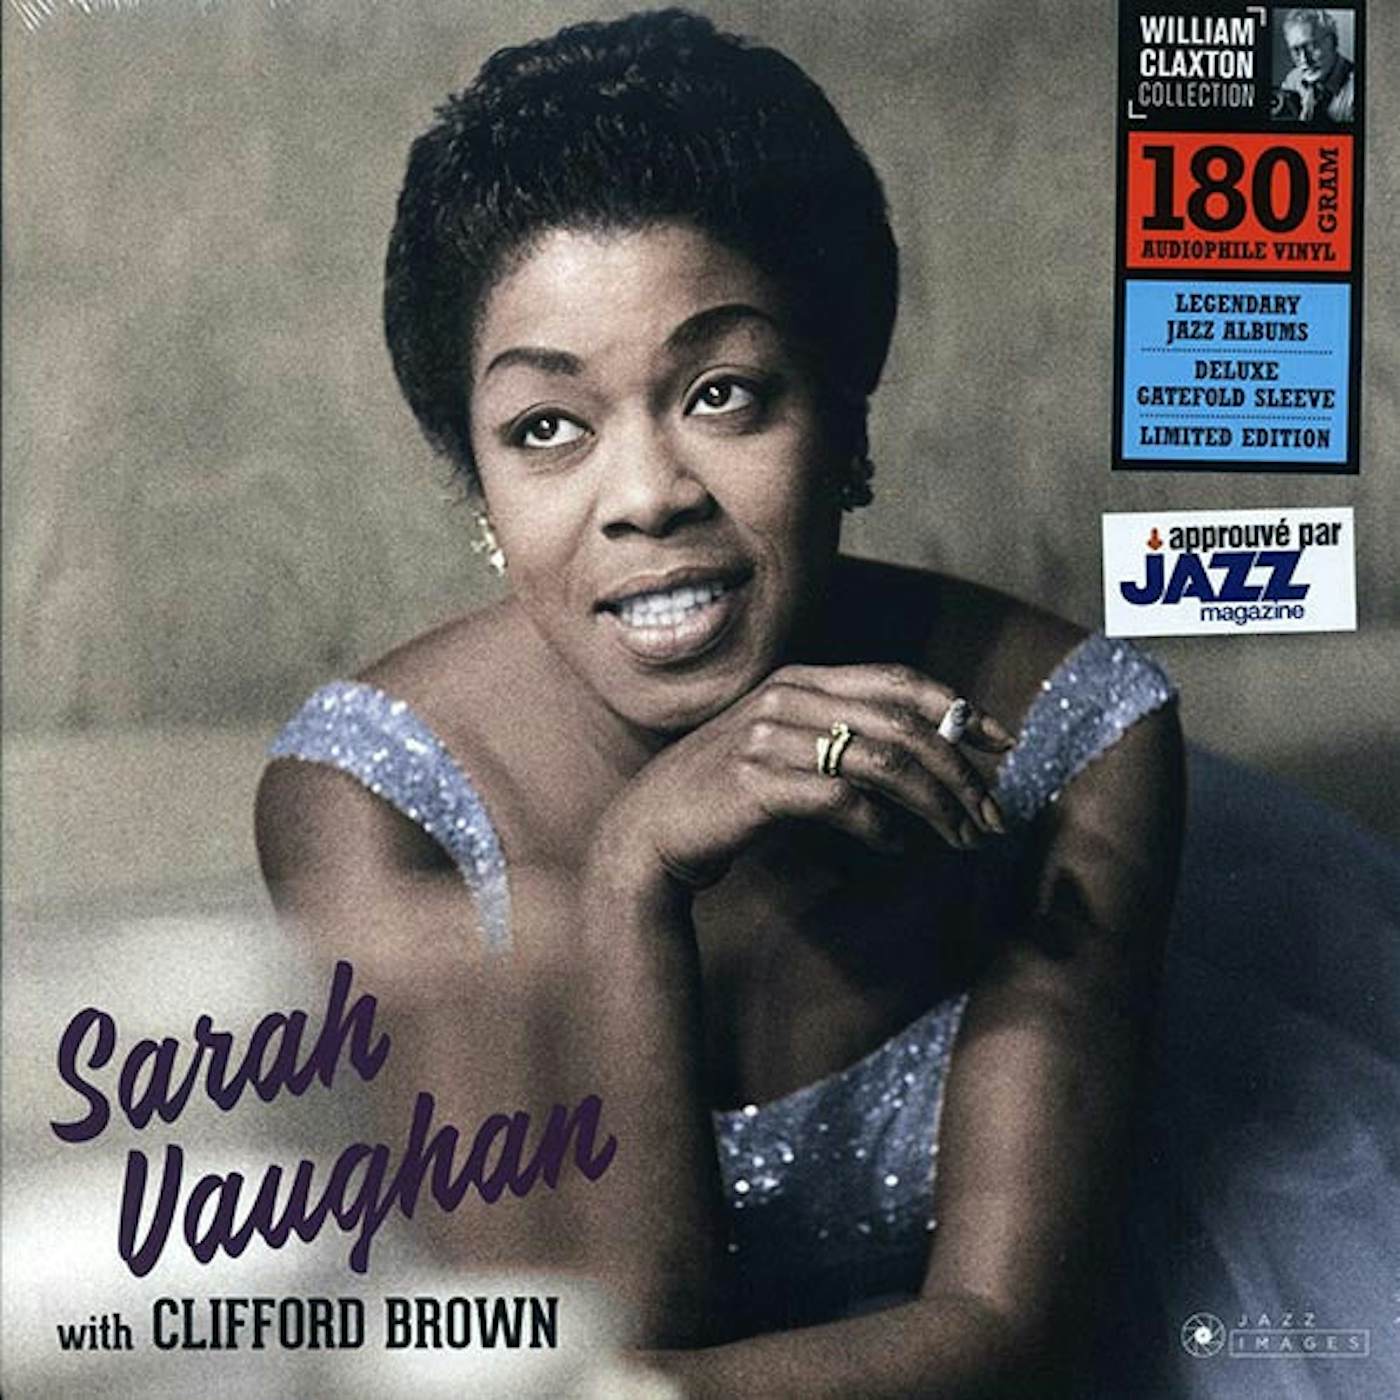 Sarah Vaughan, Clifford Brown  LP -  Sarah Vaughan With Clifford Brown (ltd. ed.) (180g) (Vinyl)